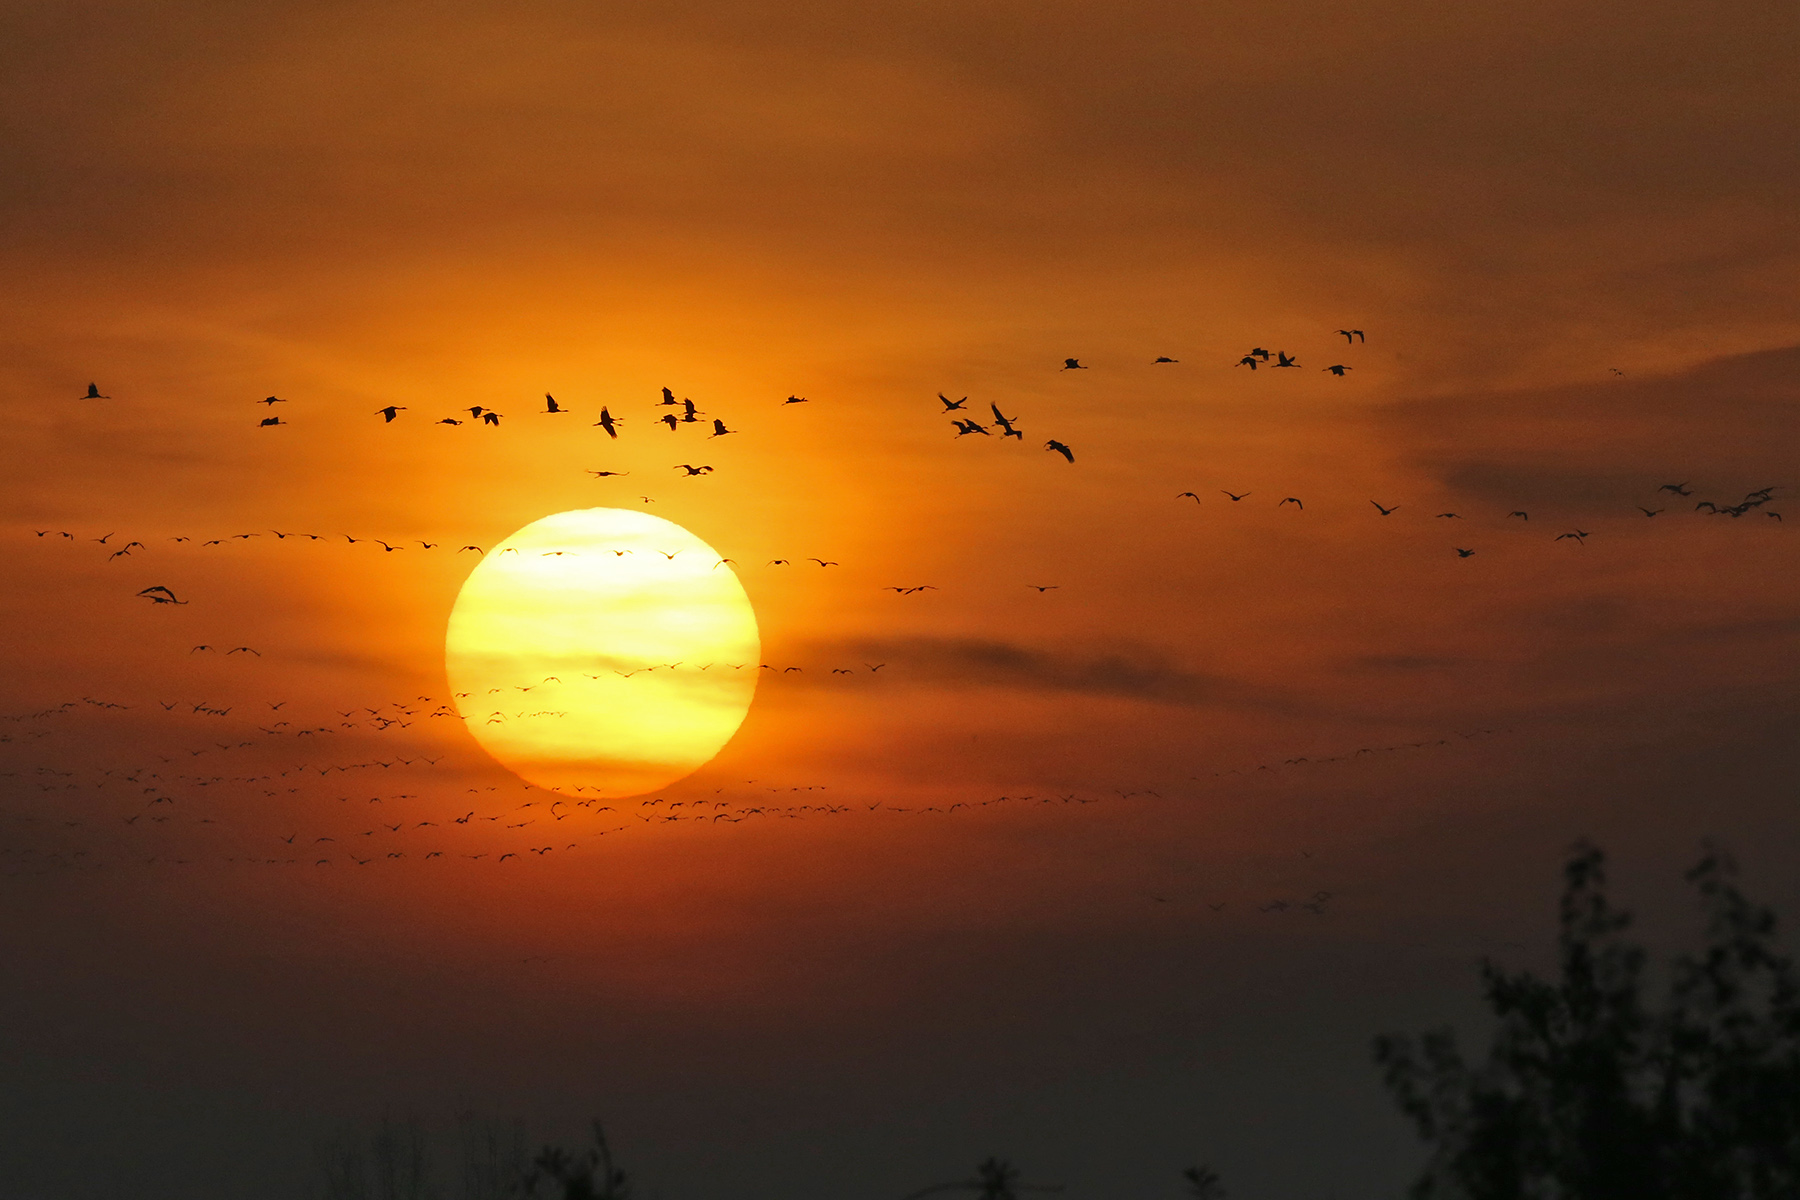 Common Cranes at sunrise over the Hortobágy (image by János Oláh)